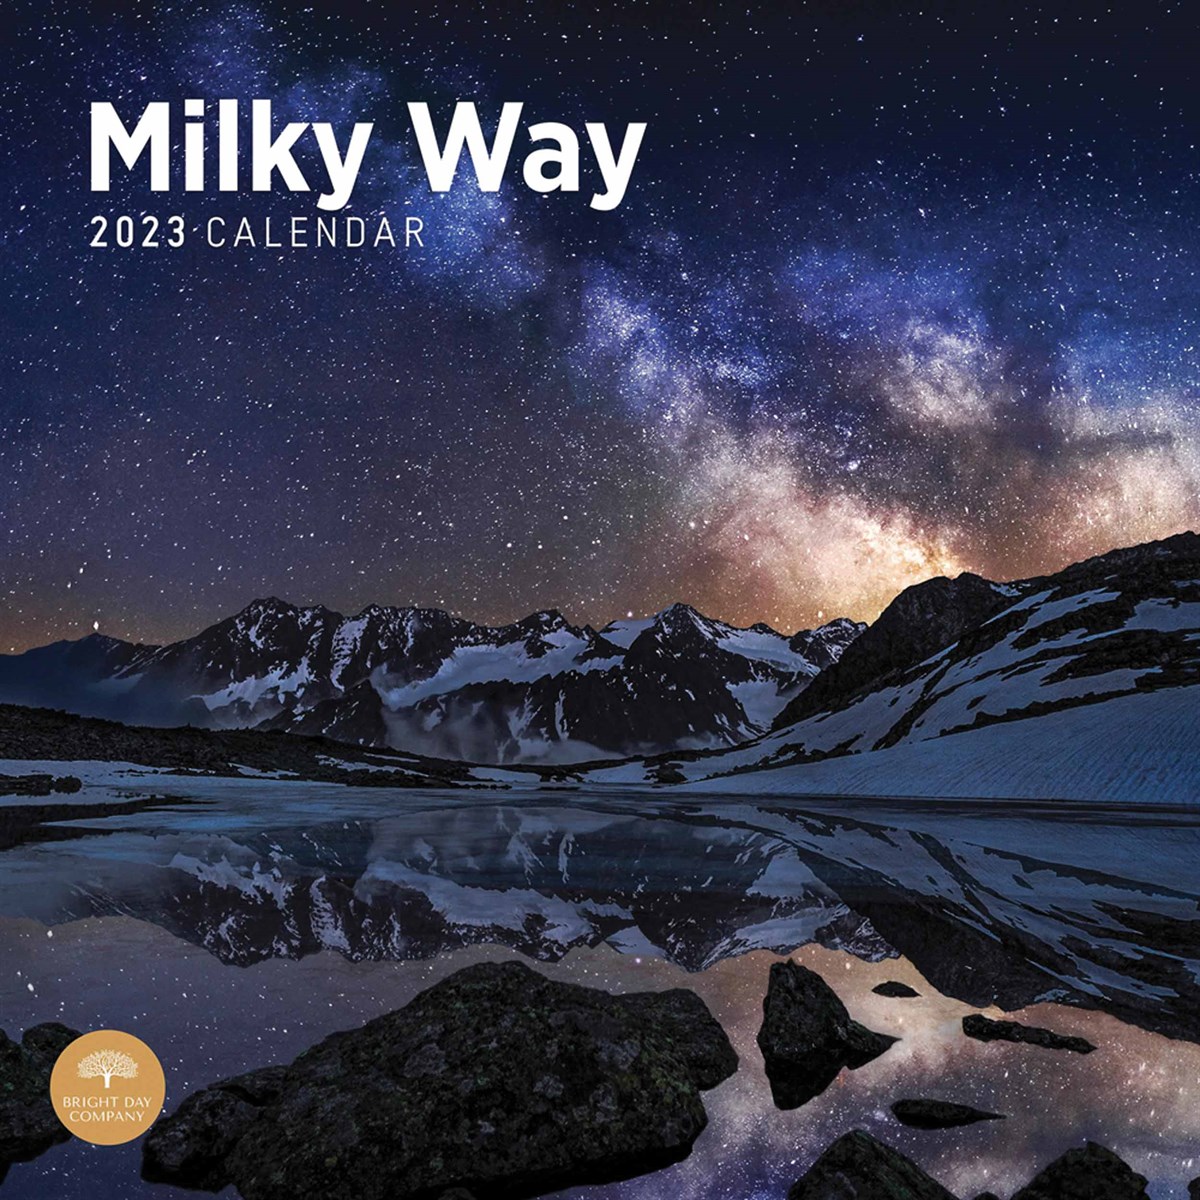 Milky Way 2023 Calendars